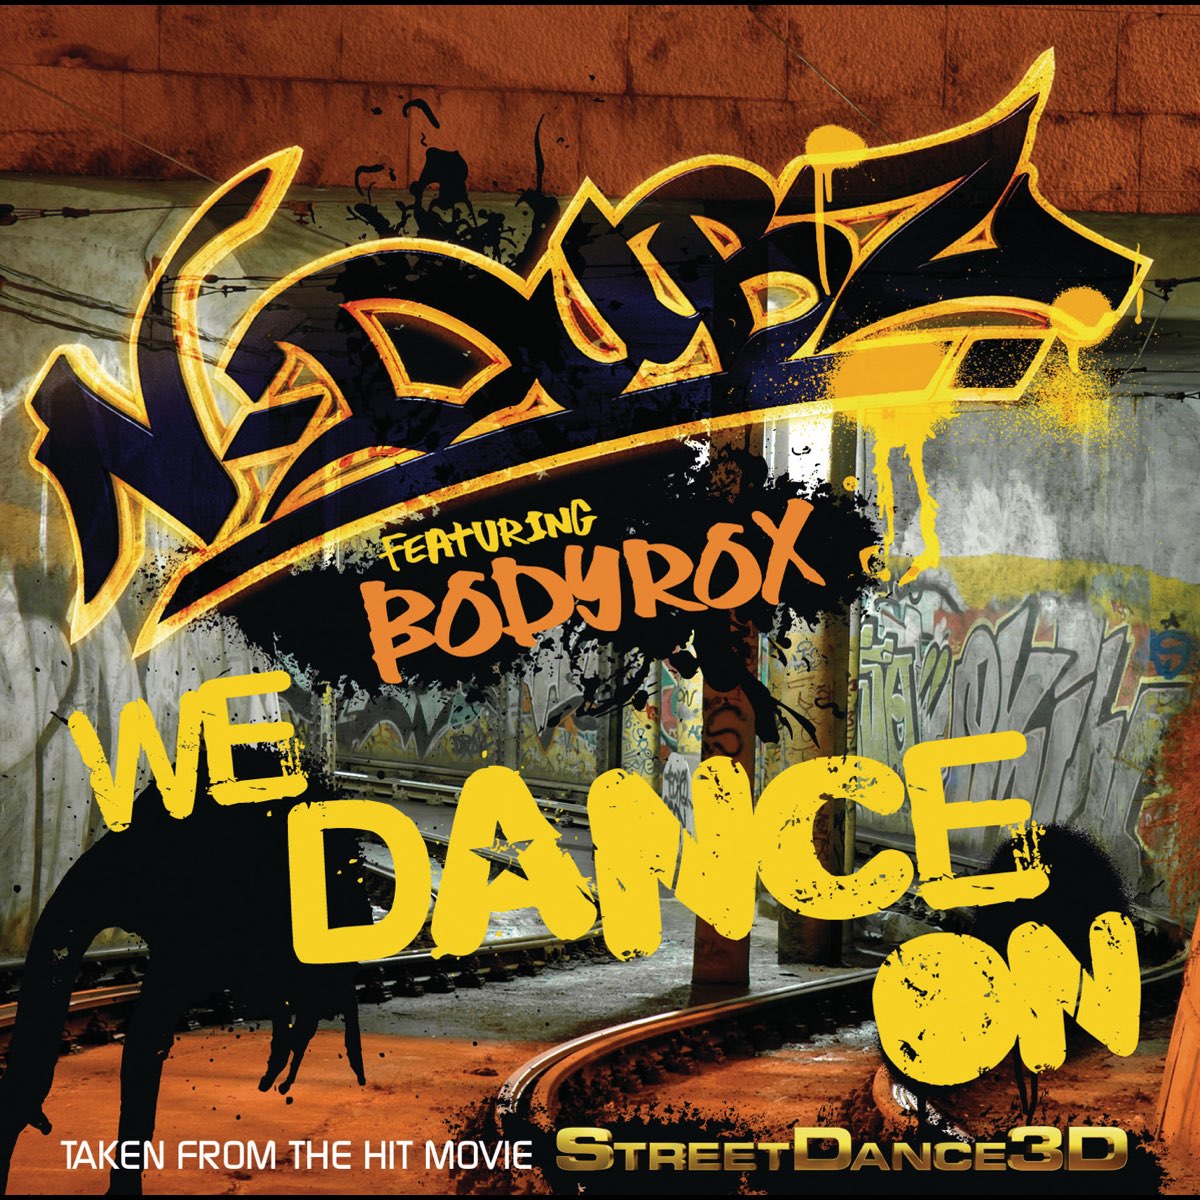 N-Dubz featuring Bodyrox — We Dance On cover artwork